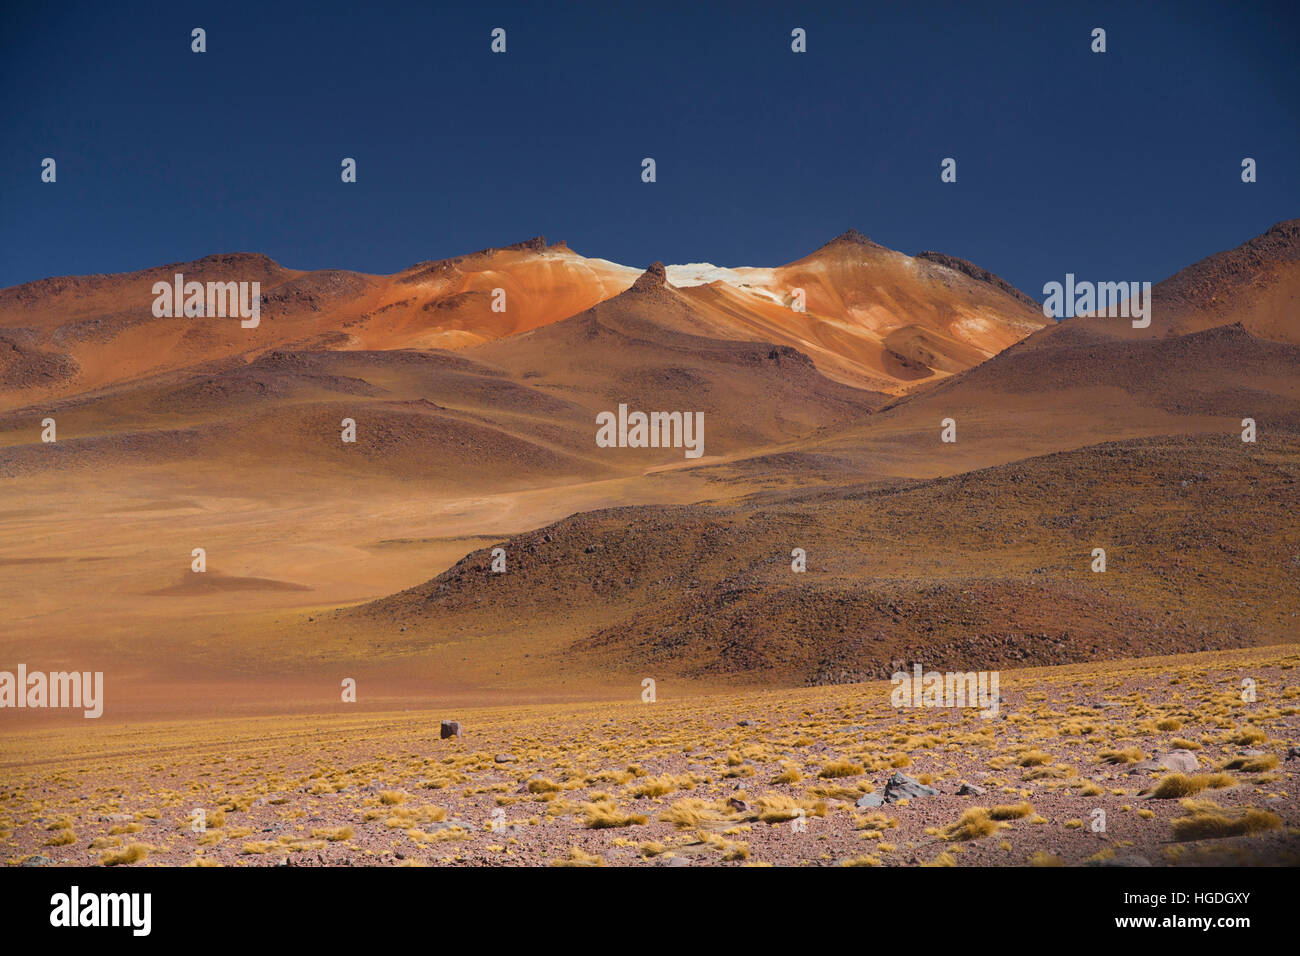 Dali desert, part of the Siloli desert, Stock Photo